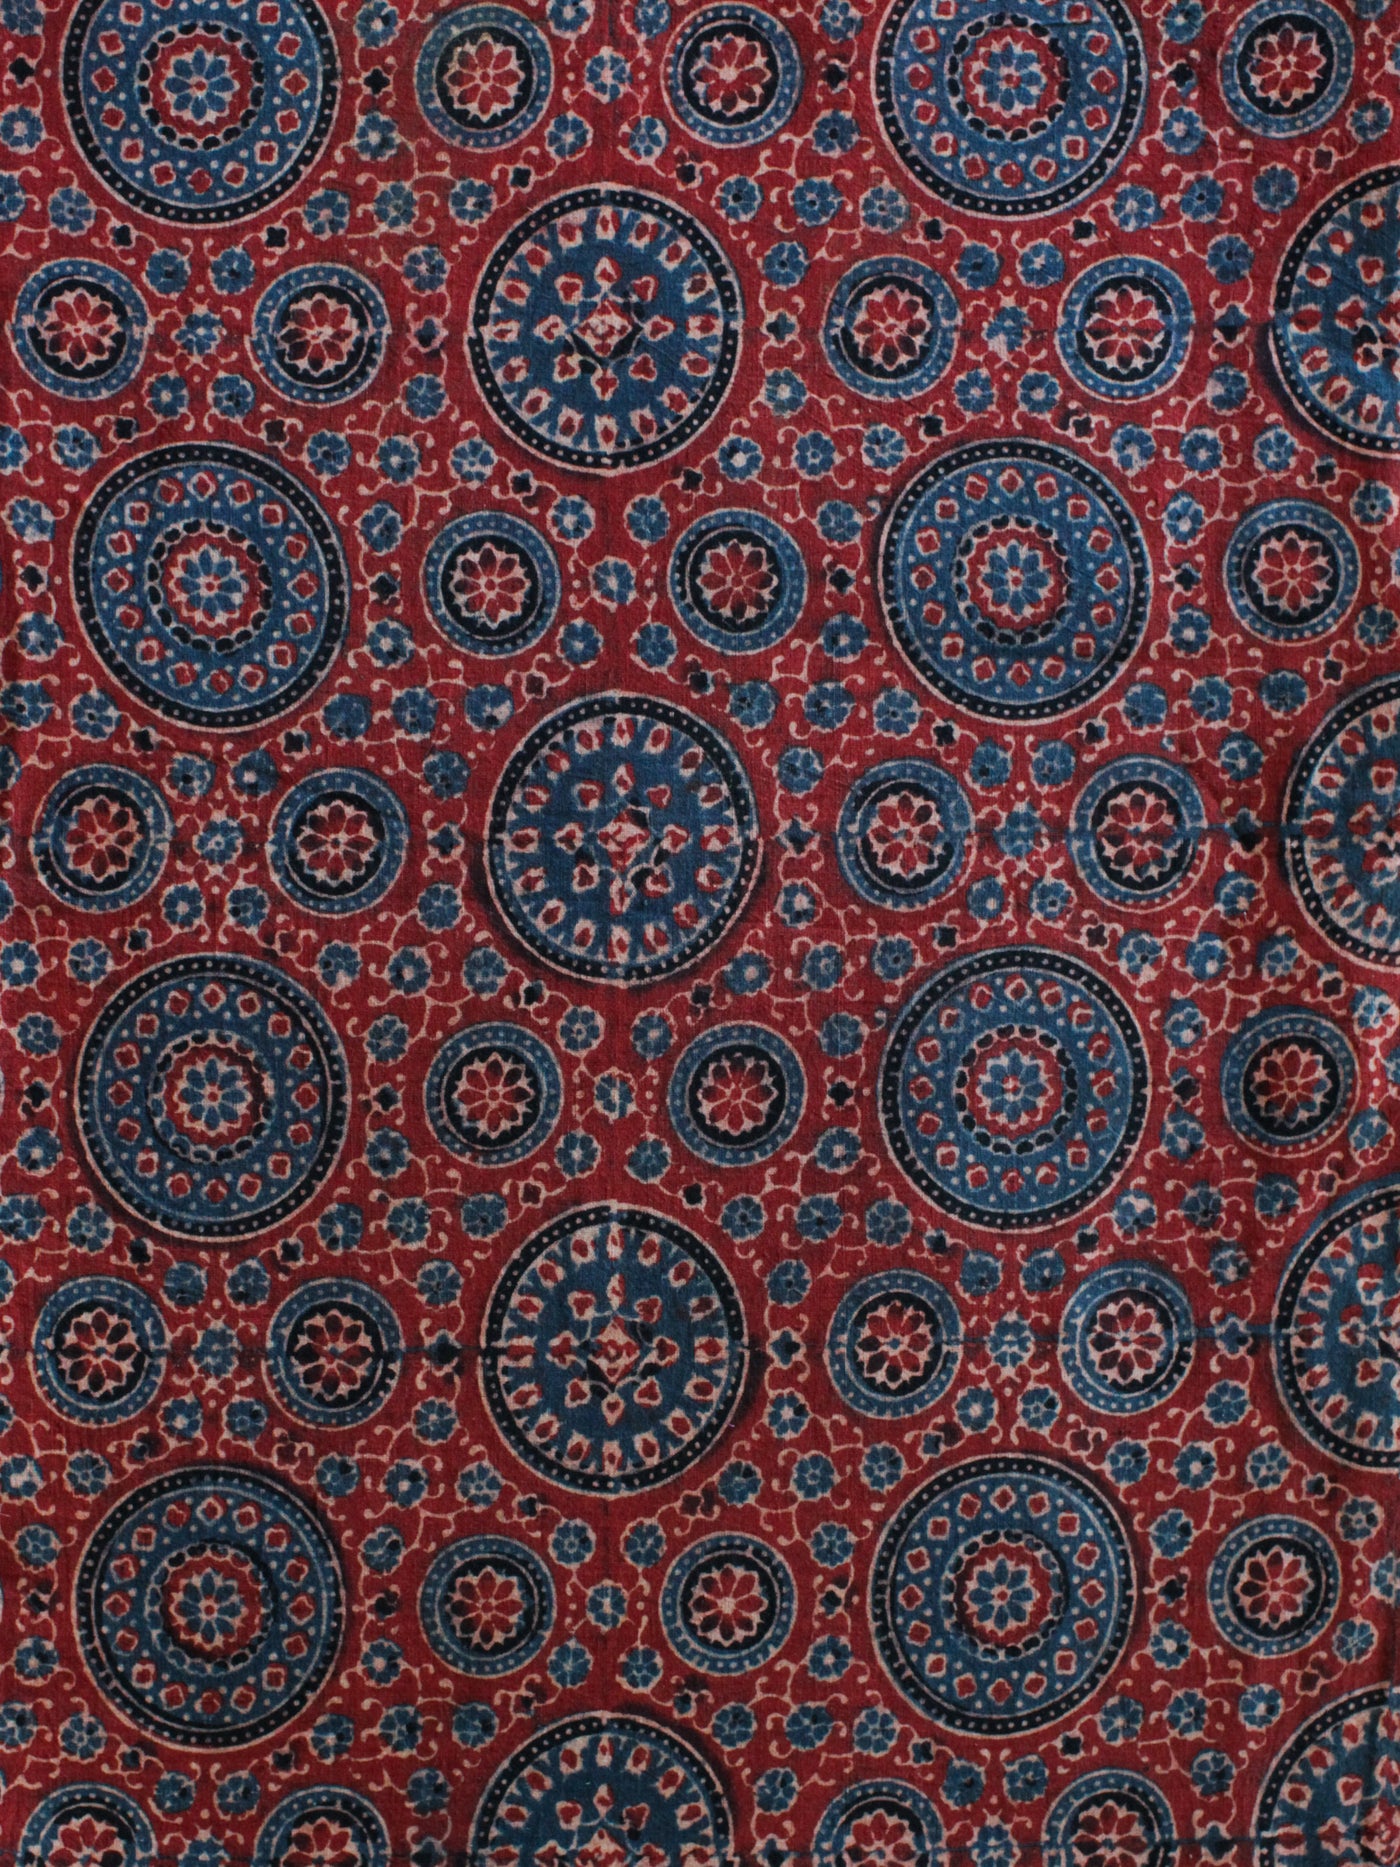 Blockprint Natural Dye Fabric #005 - Red Ajrakh